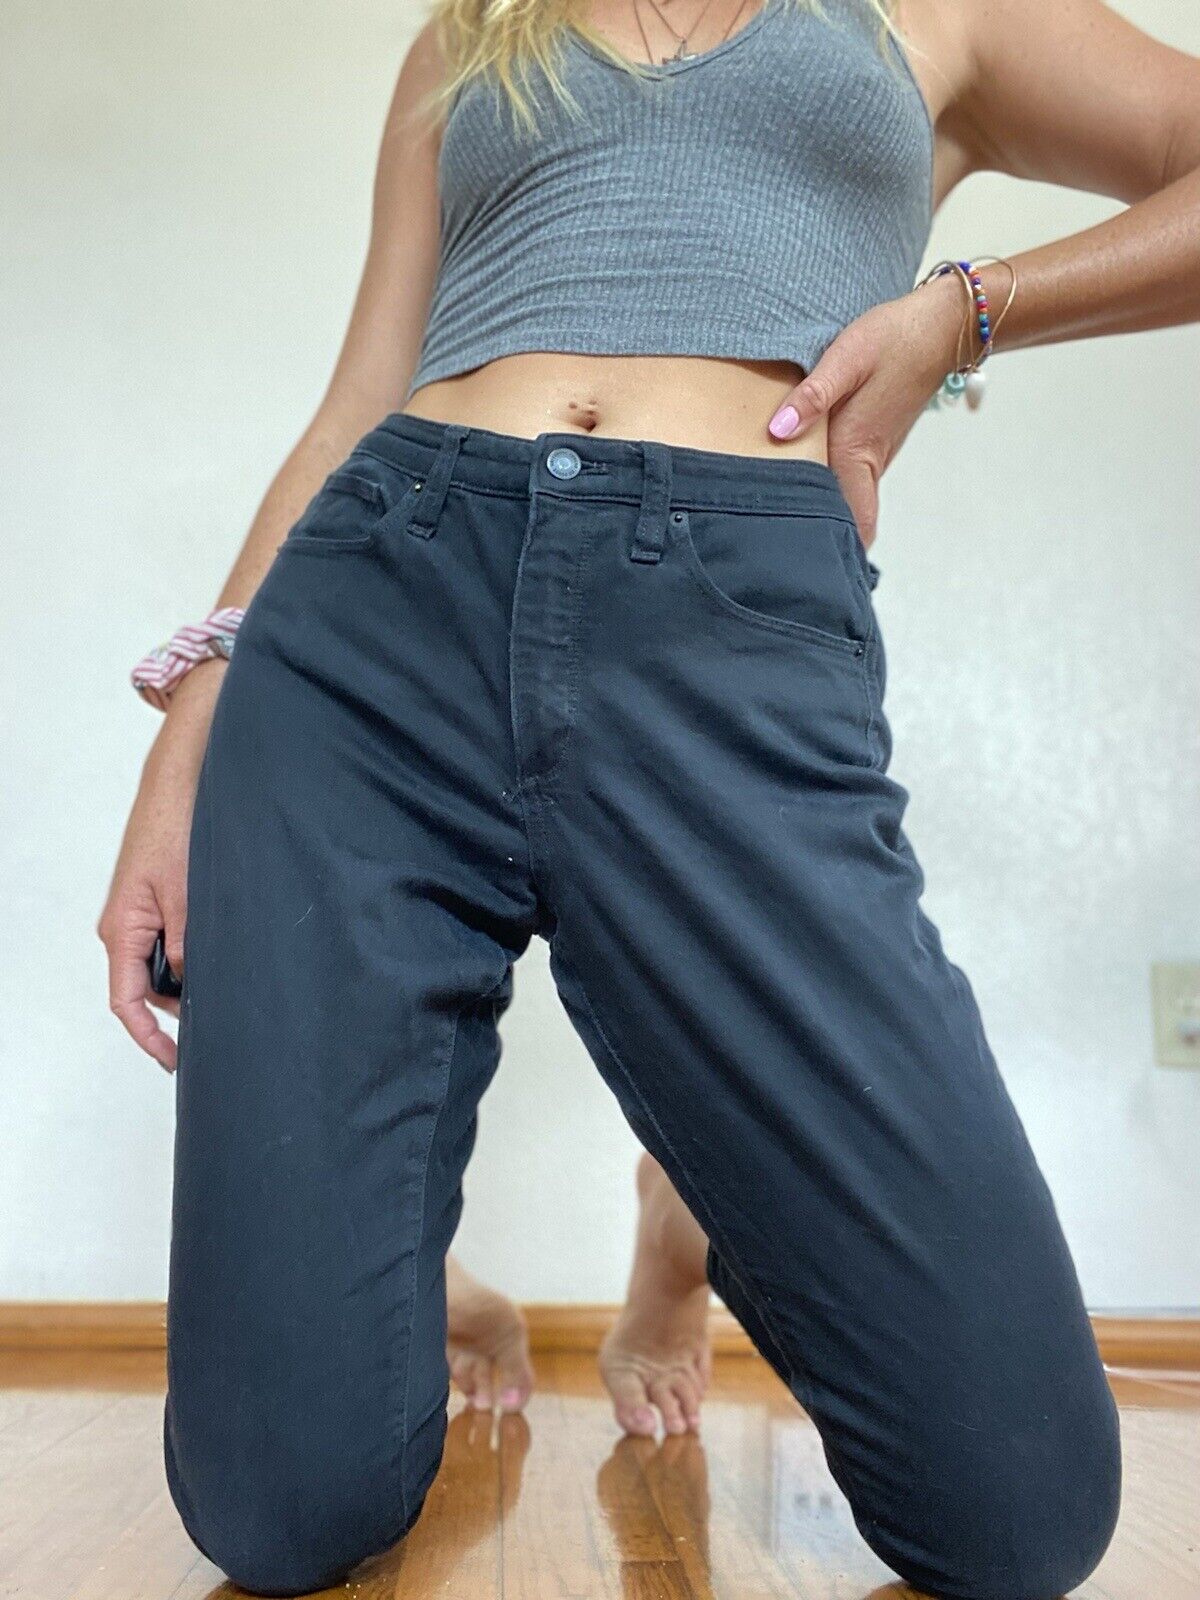 Black Highest Rise Skinny Jeans - Universal Thread - Size 8